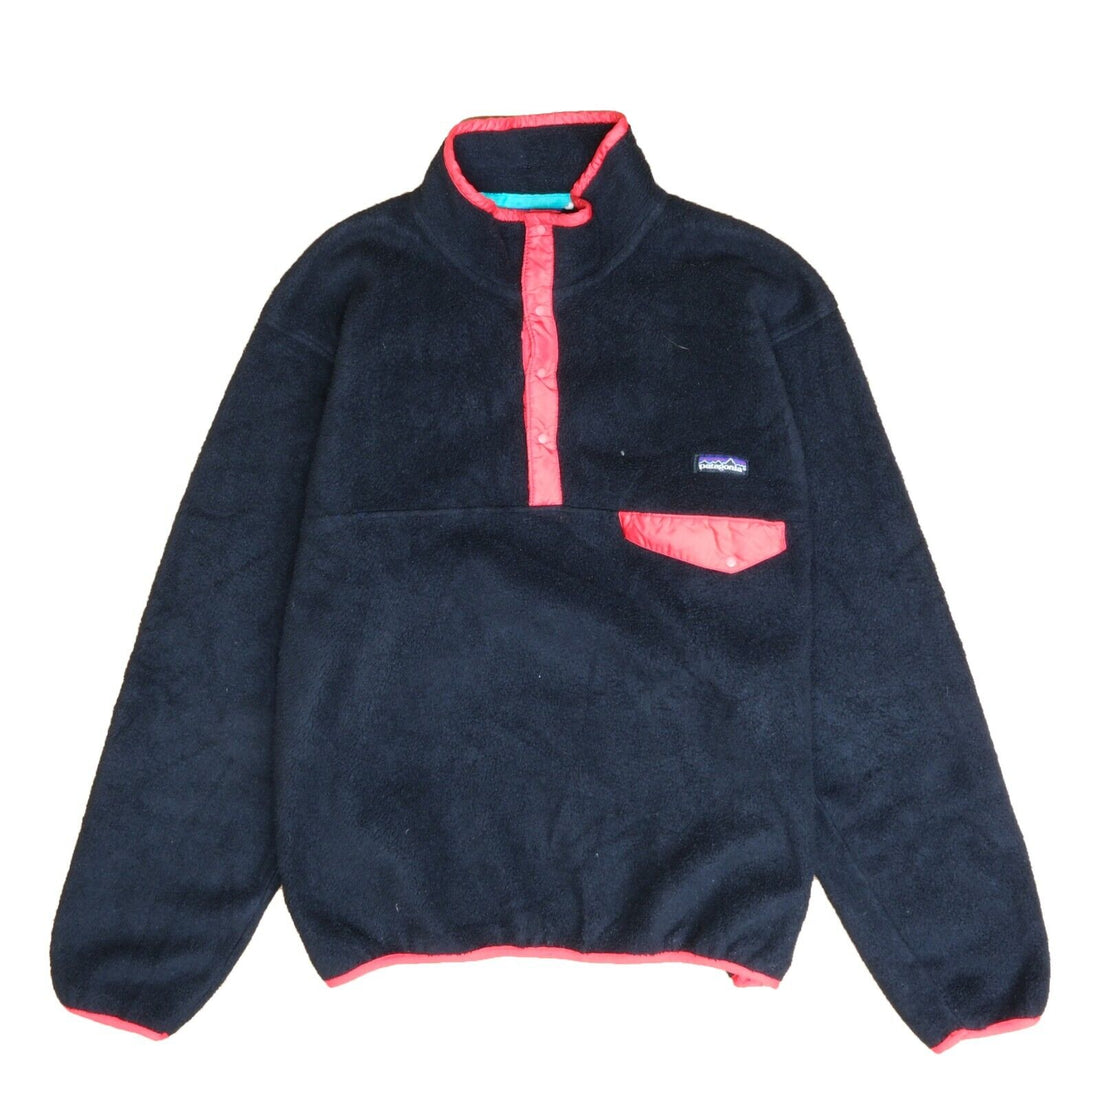 Vintage Patagonia Snap T Fleece Jacket Size Large Black Red